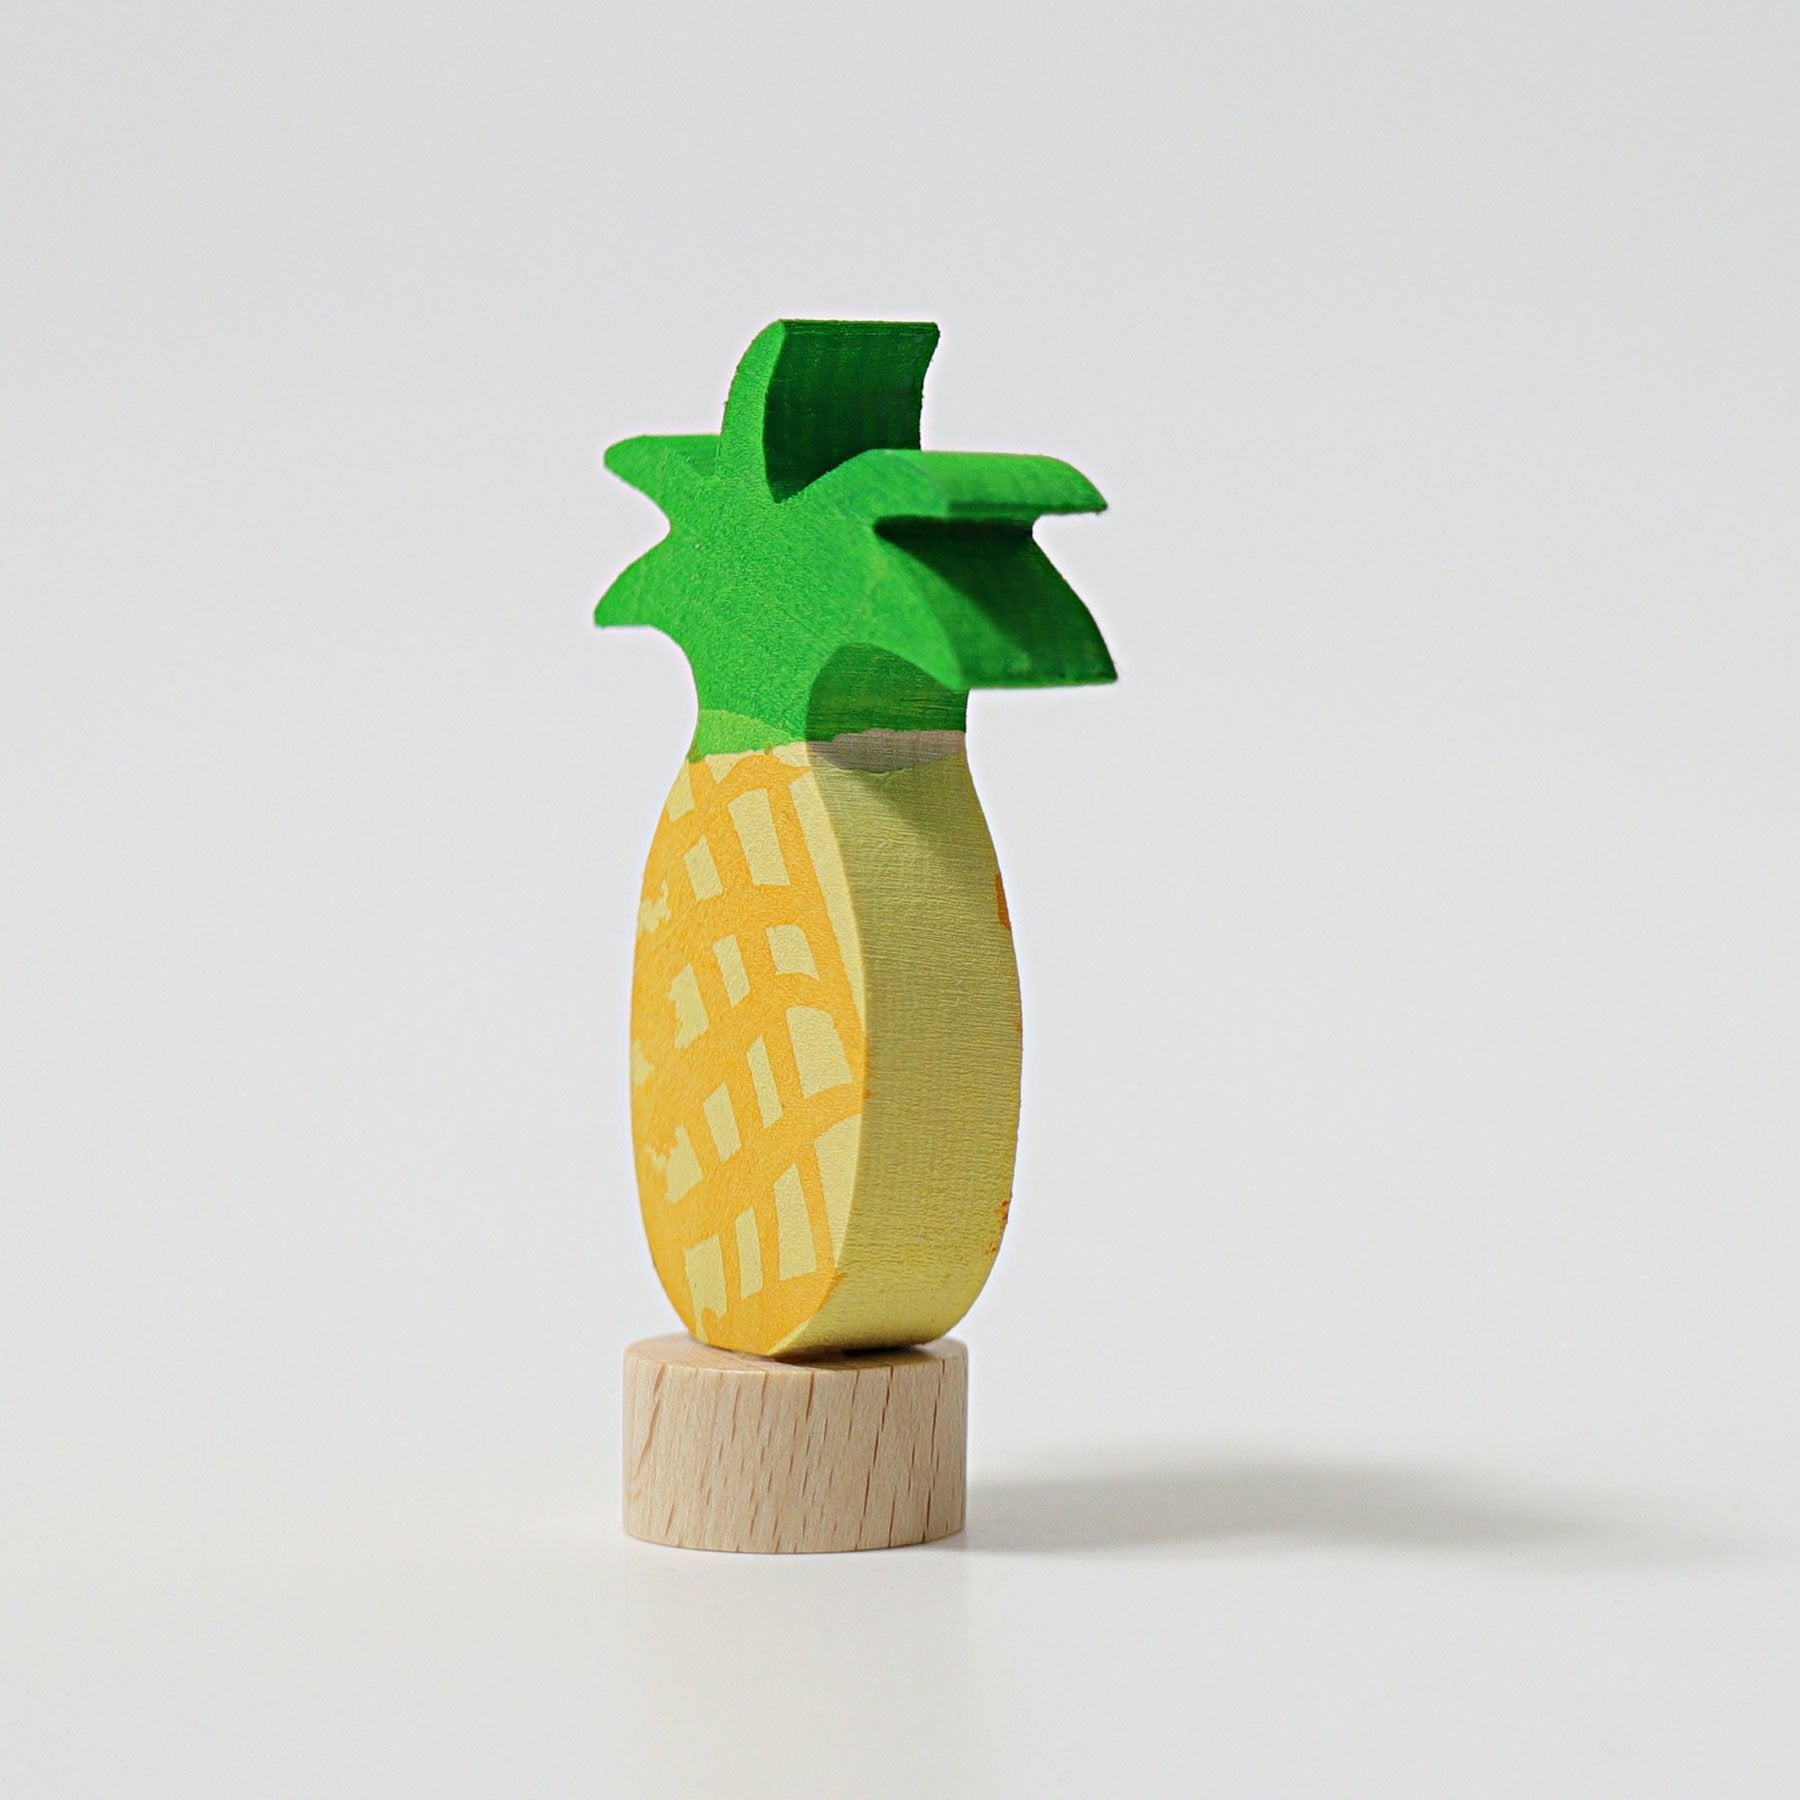 Grimm's | Steckfigur Ananas